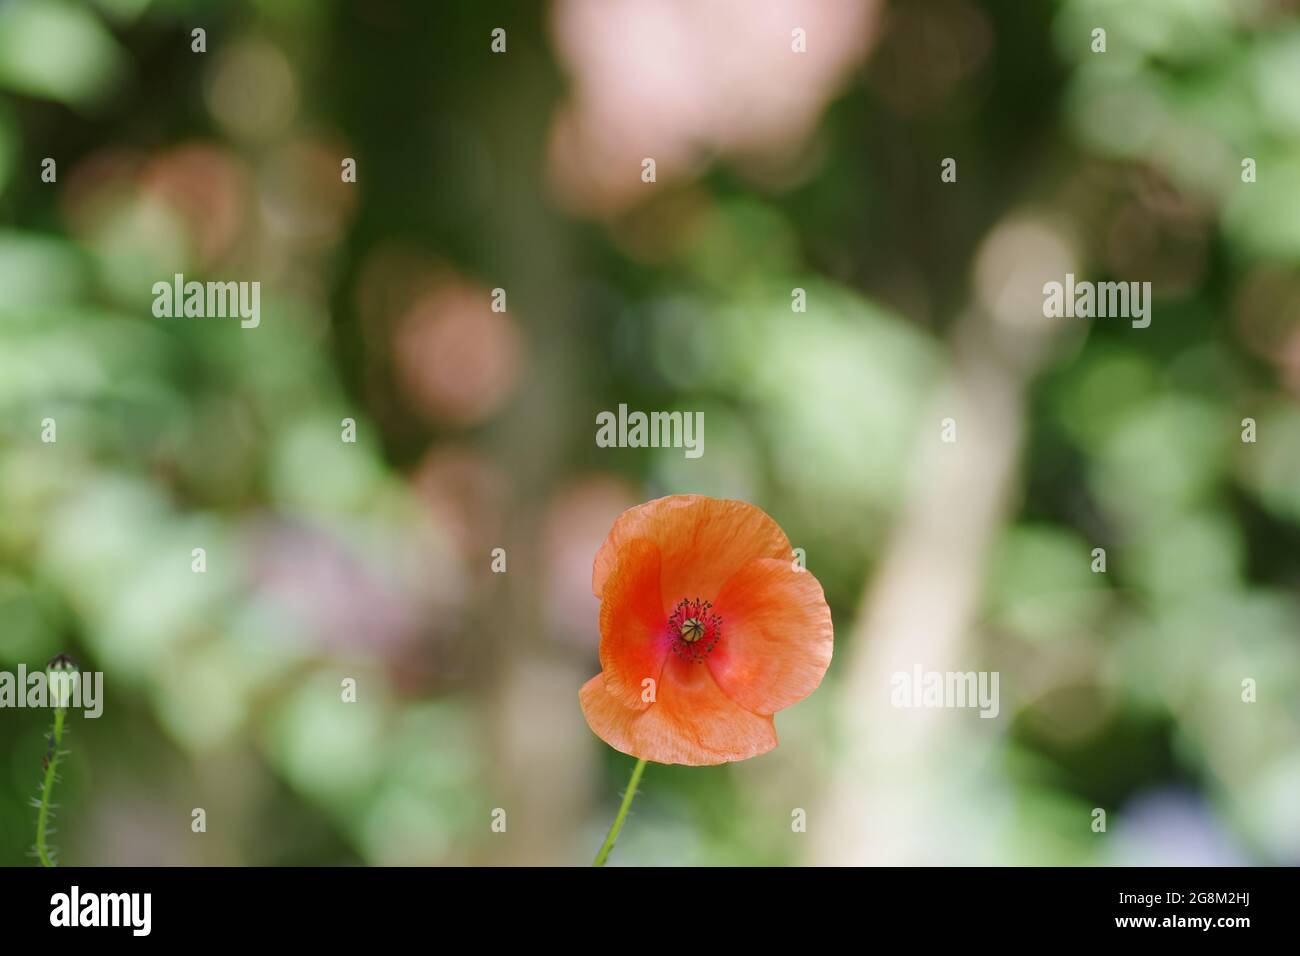 Closeup shot of an orange Poppy in the garden Stock Photo